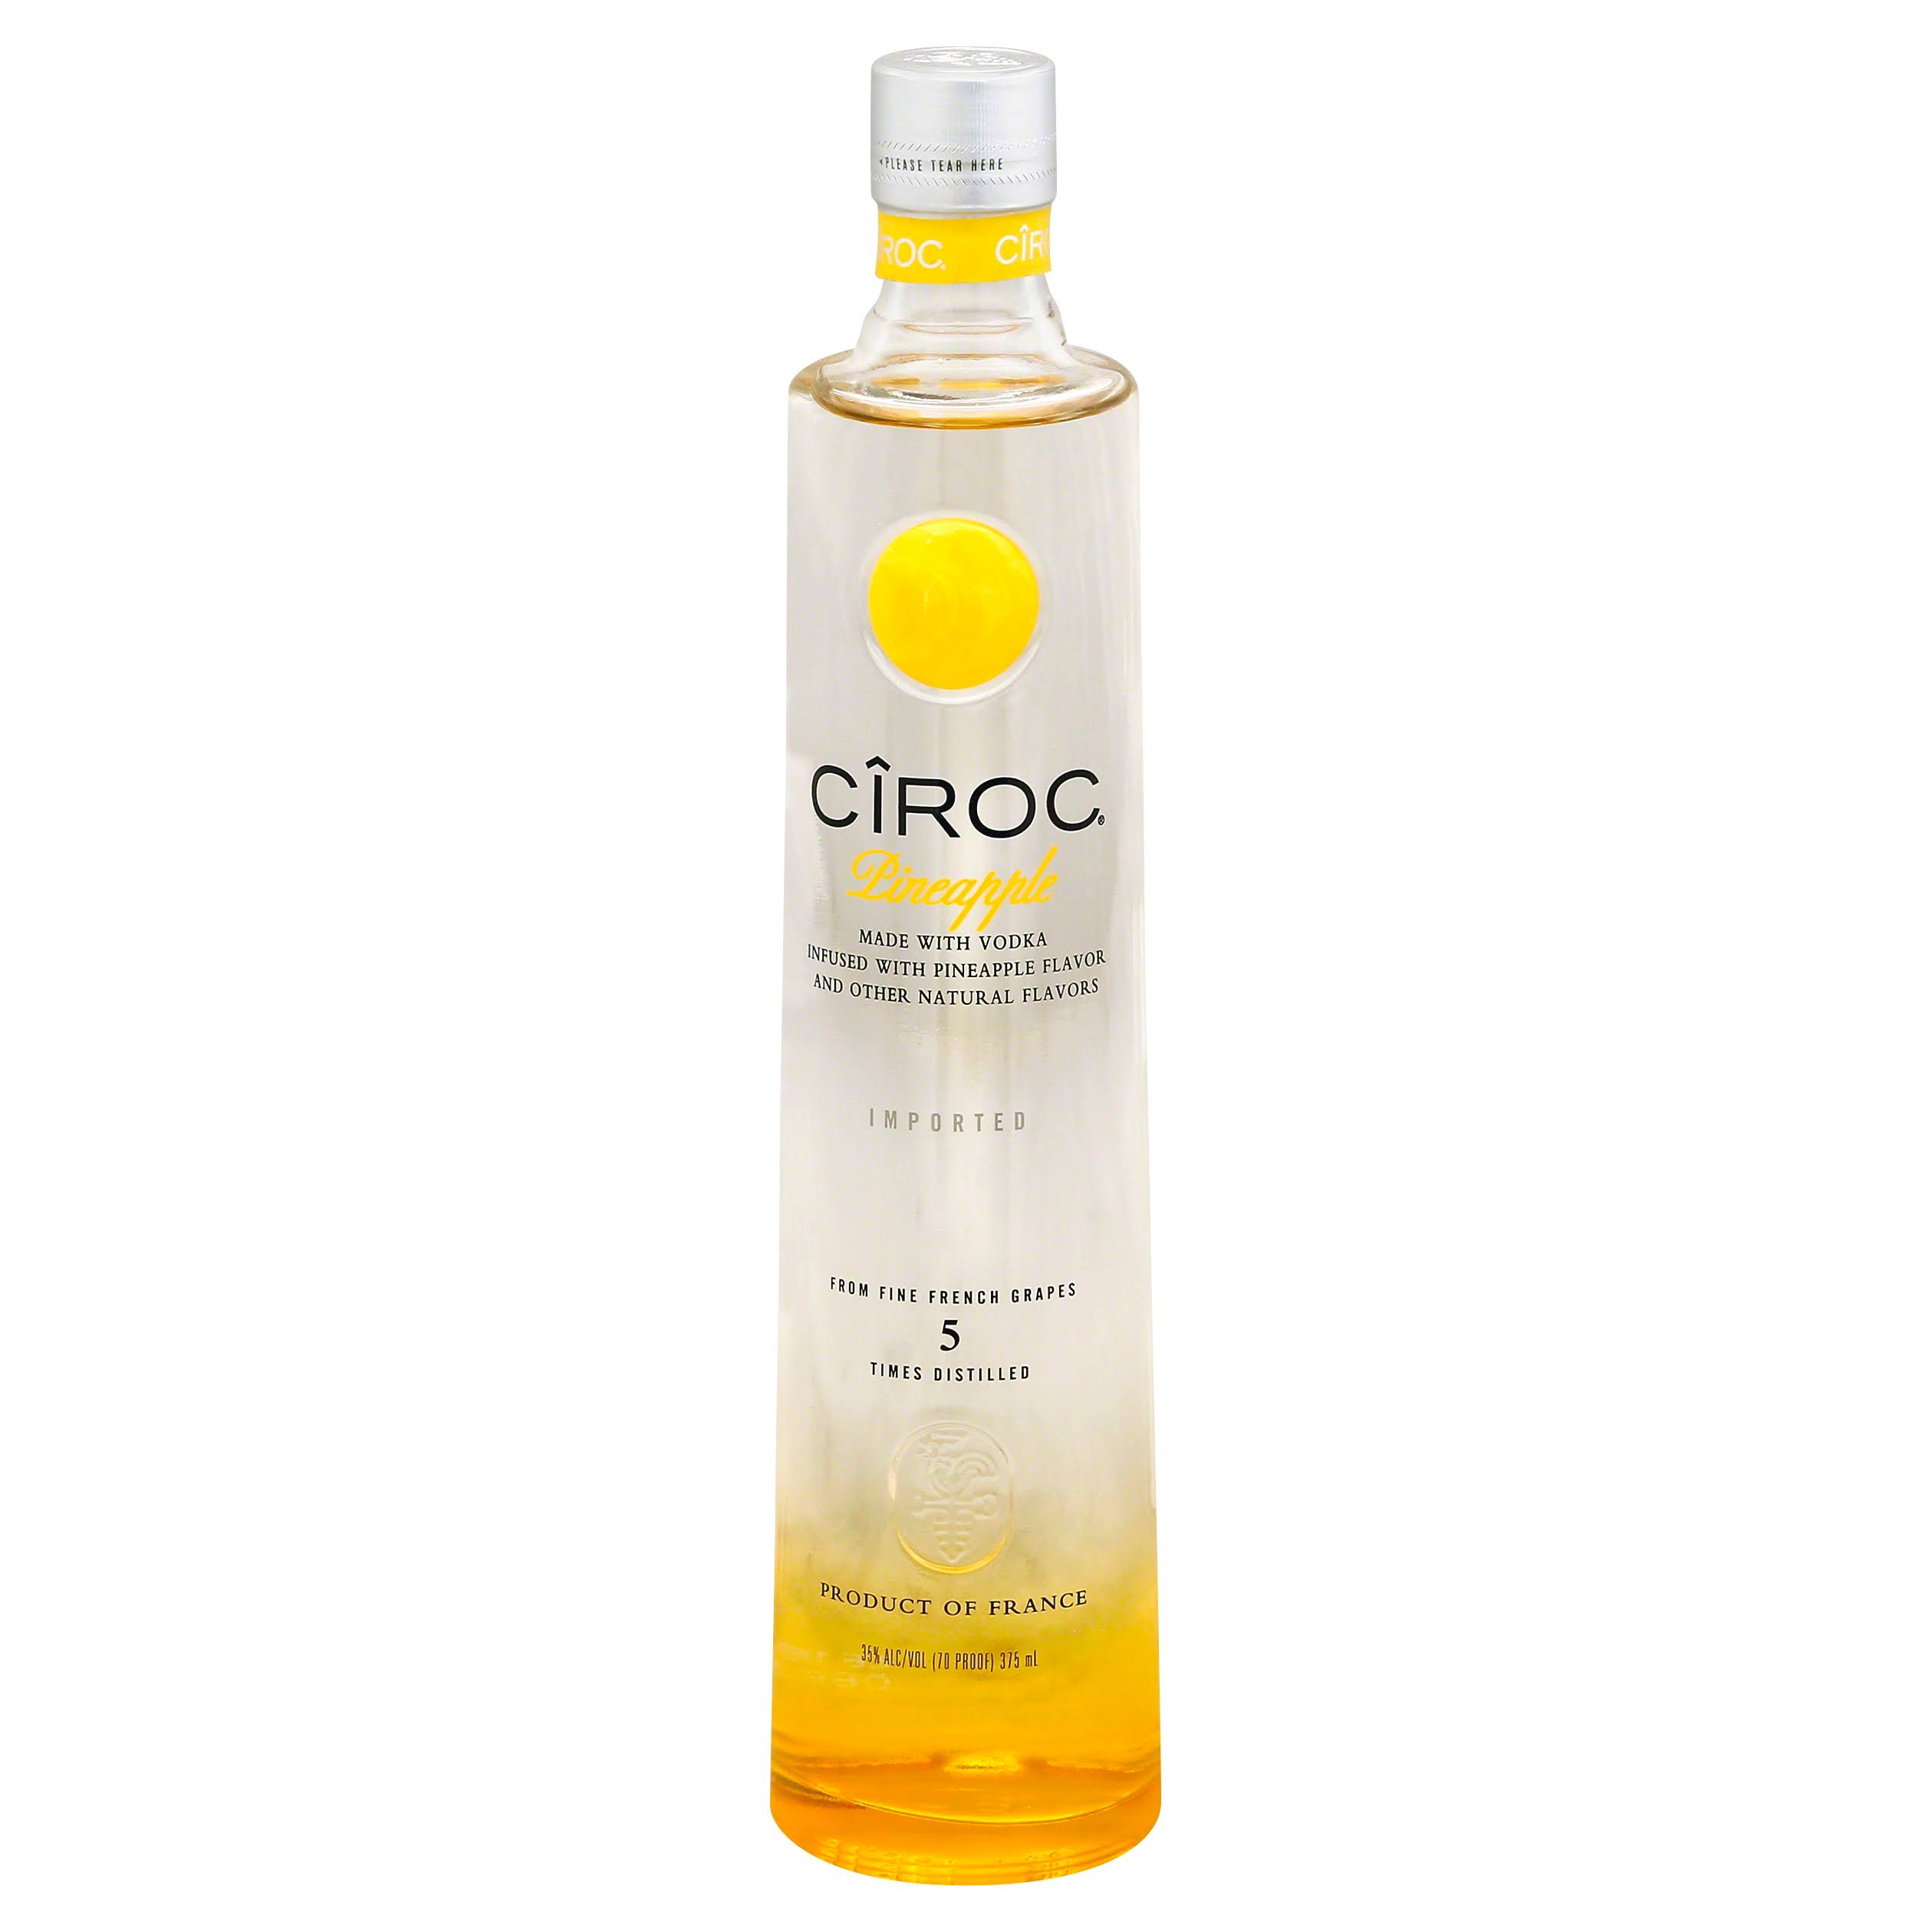 Ciroc Pineapple Vodka - 375 ml bottle